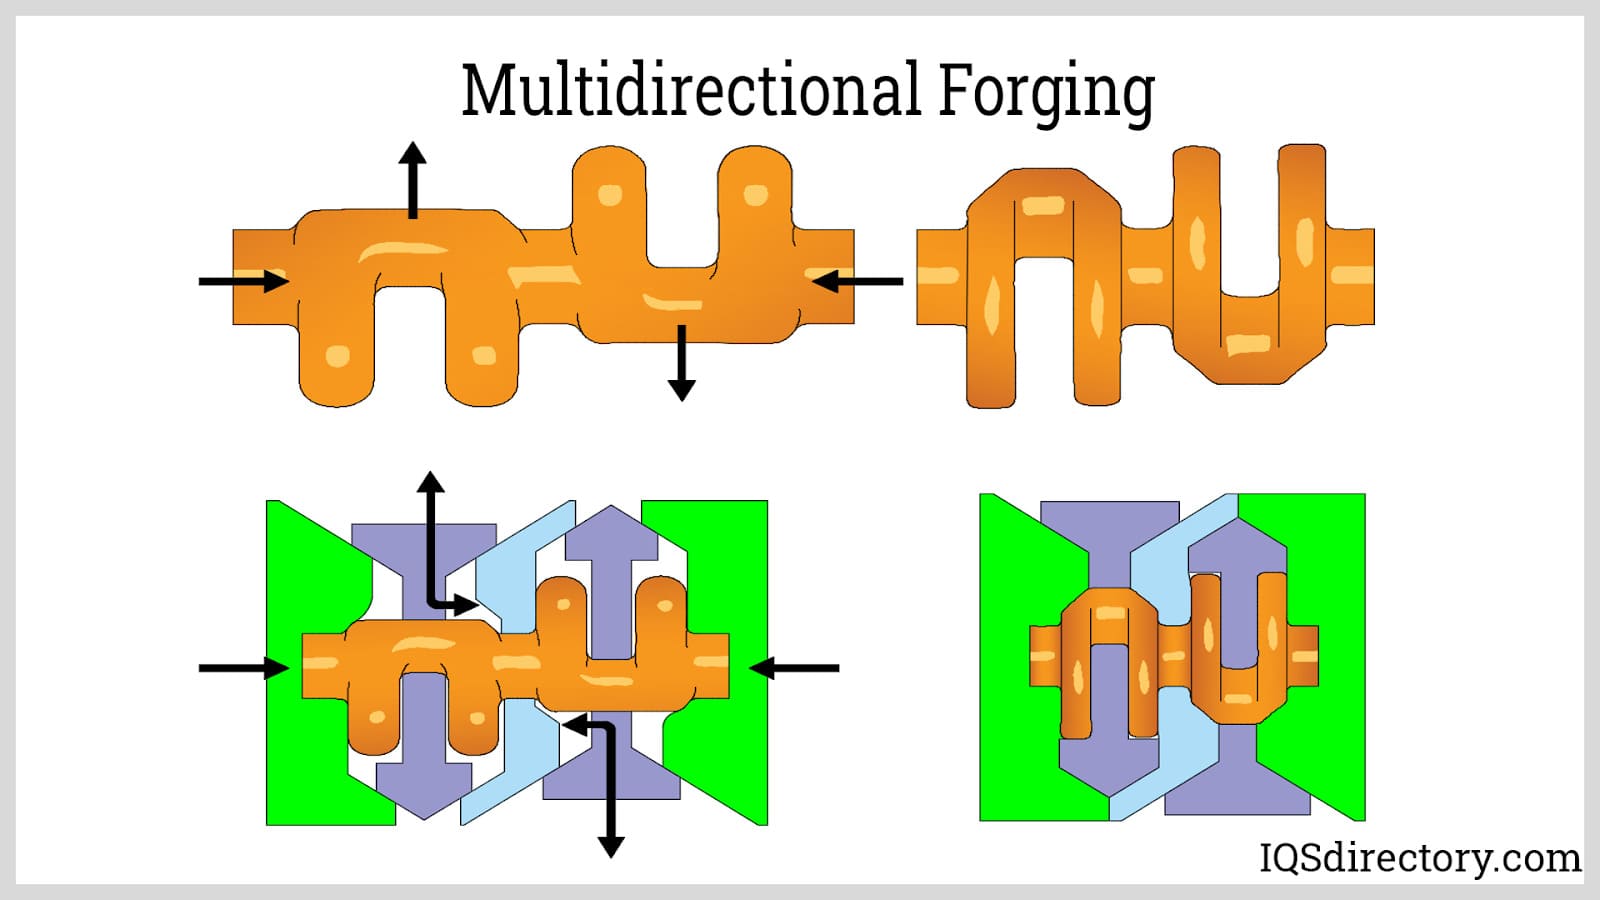 Multidirectional Forging